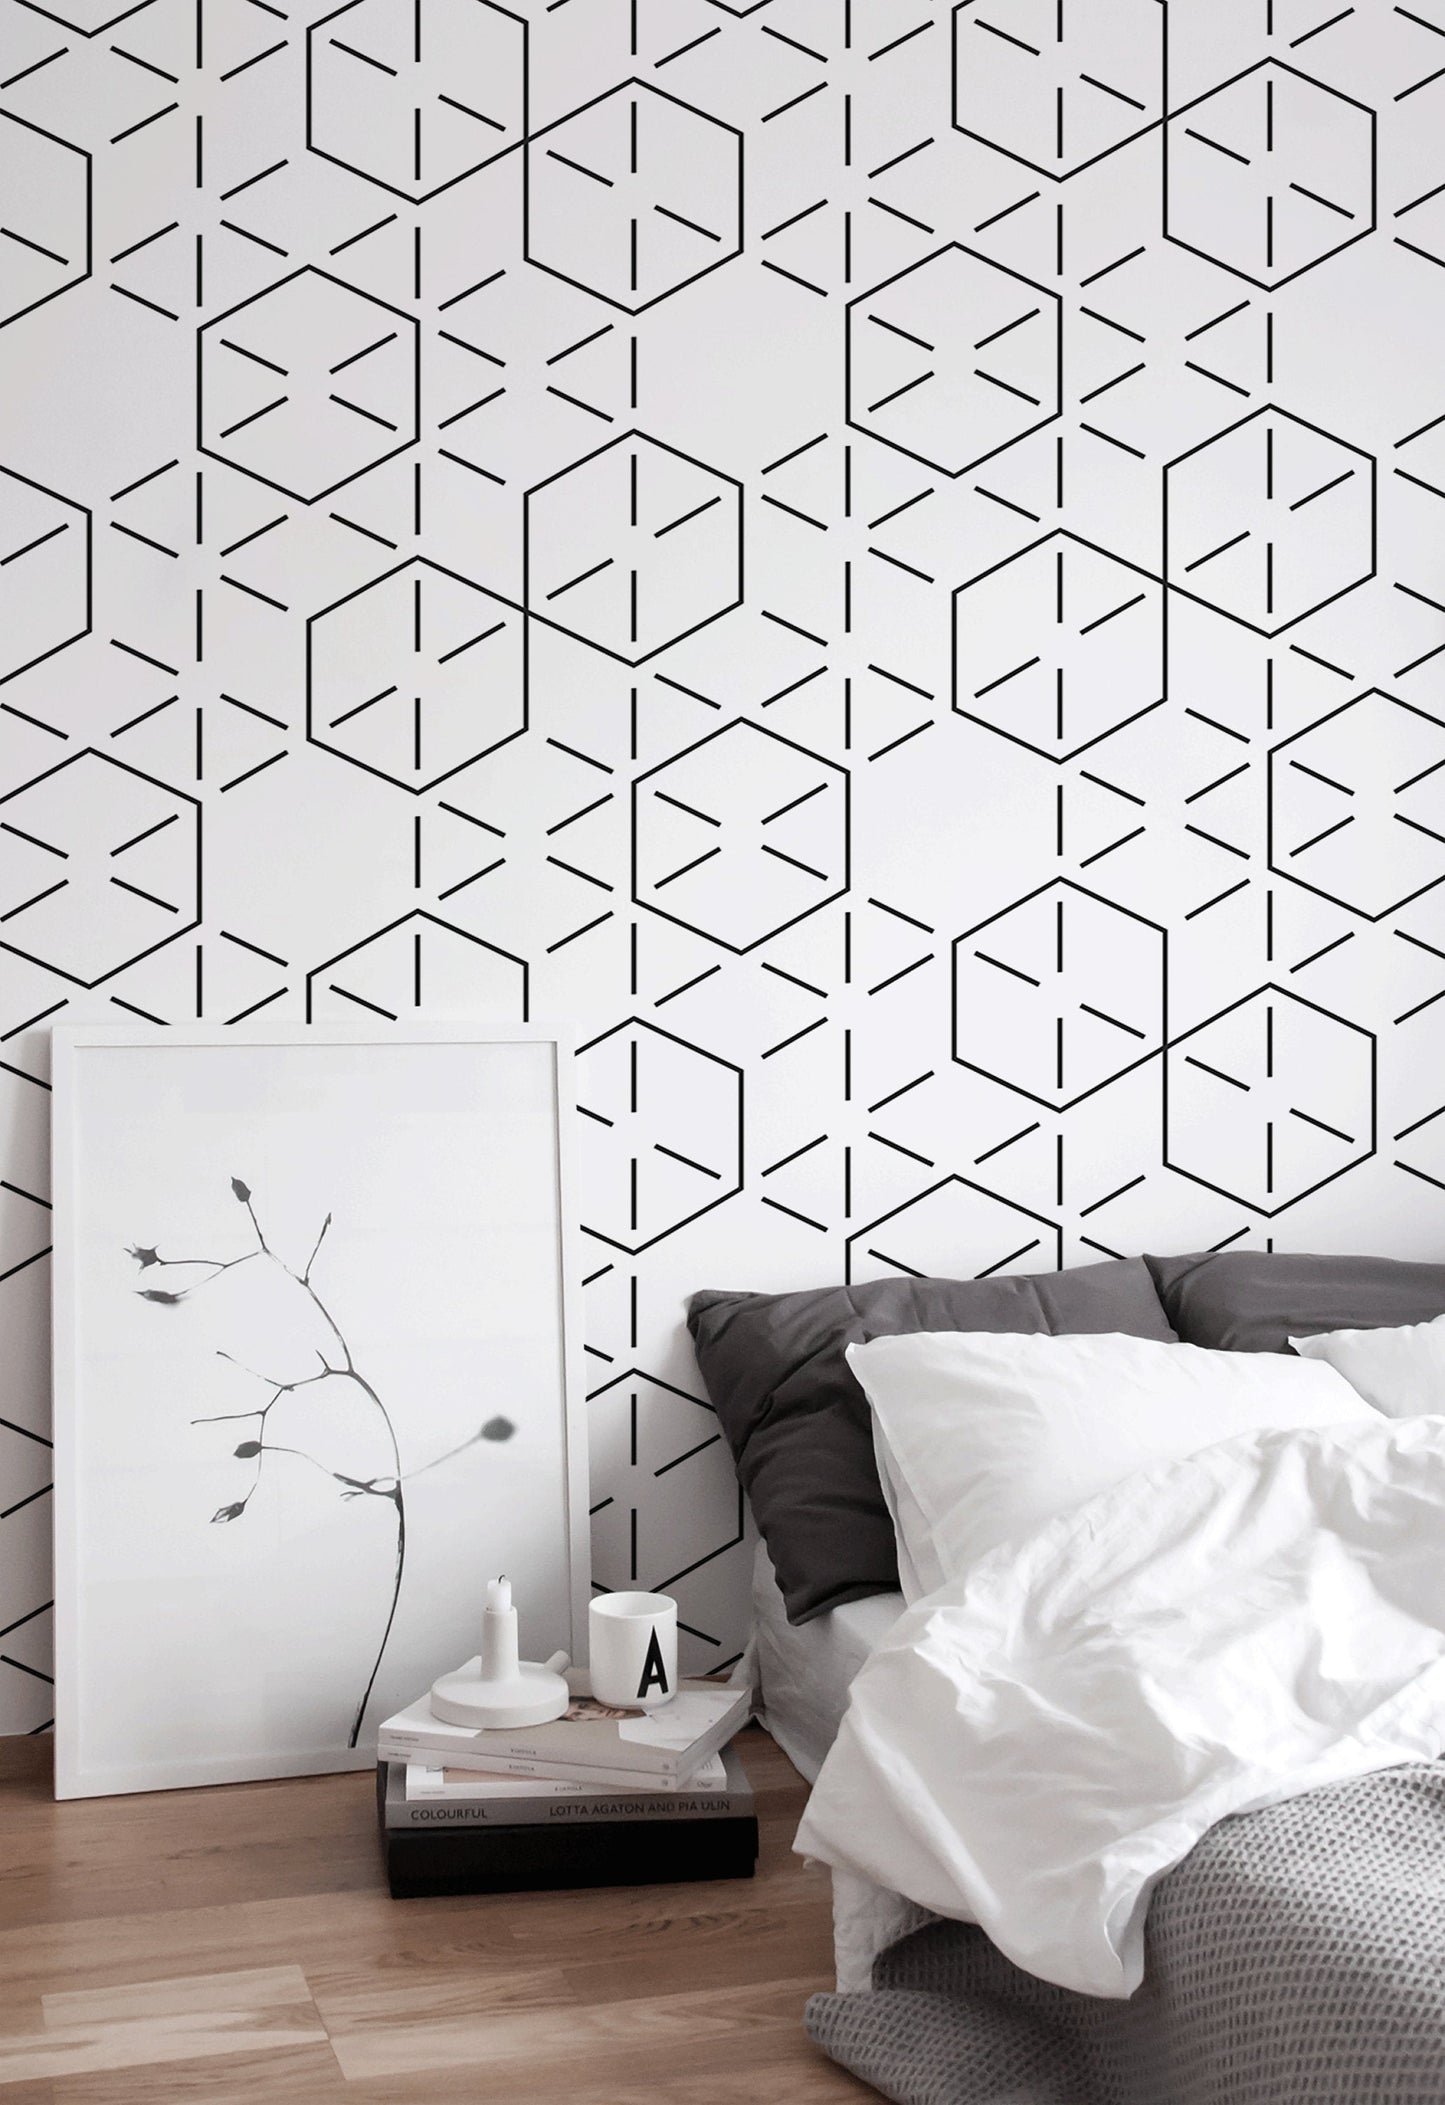 Removable Wallpaper, Scandinavian Wallpaper, Temporary Wallpaper, Minimalistic Wallpaper, Peel and Stick Wallpaper, Wall Paper, Boho - B153